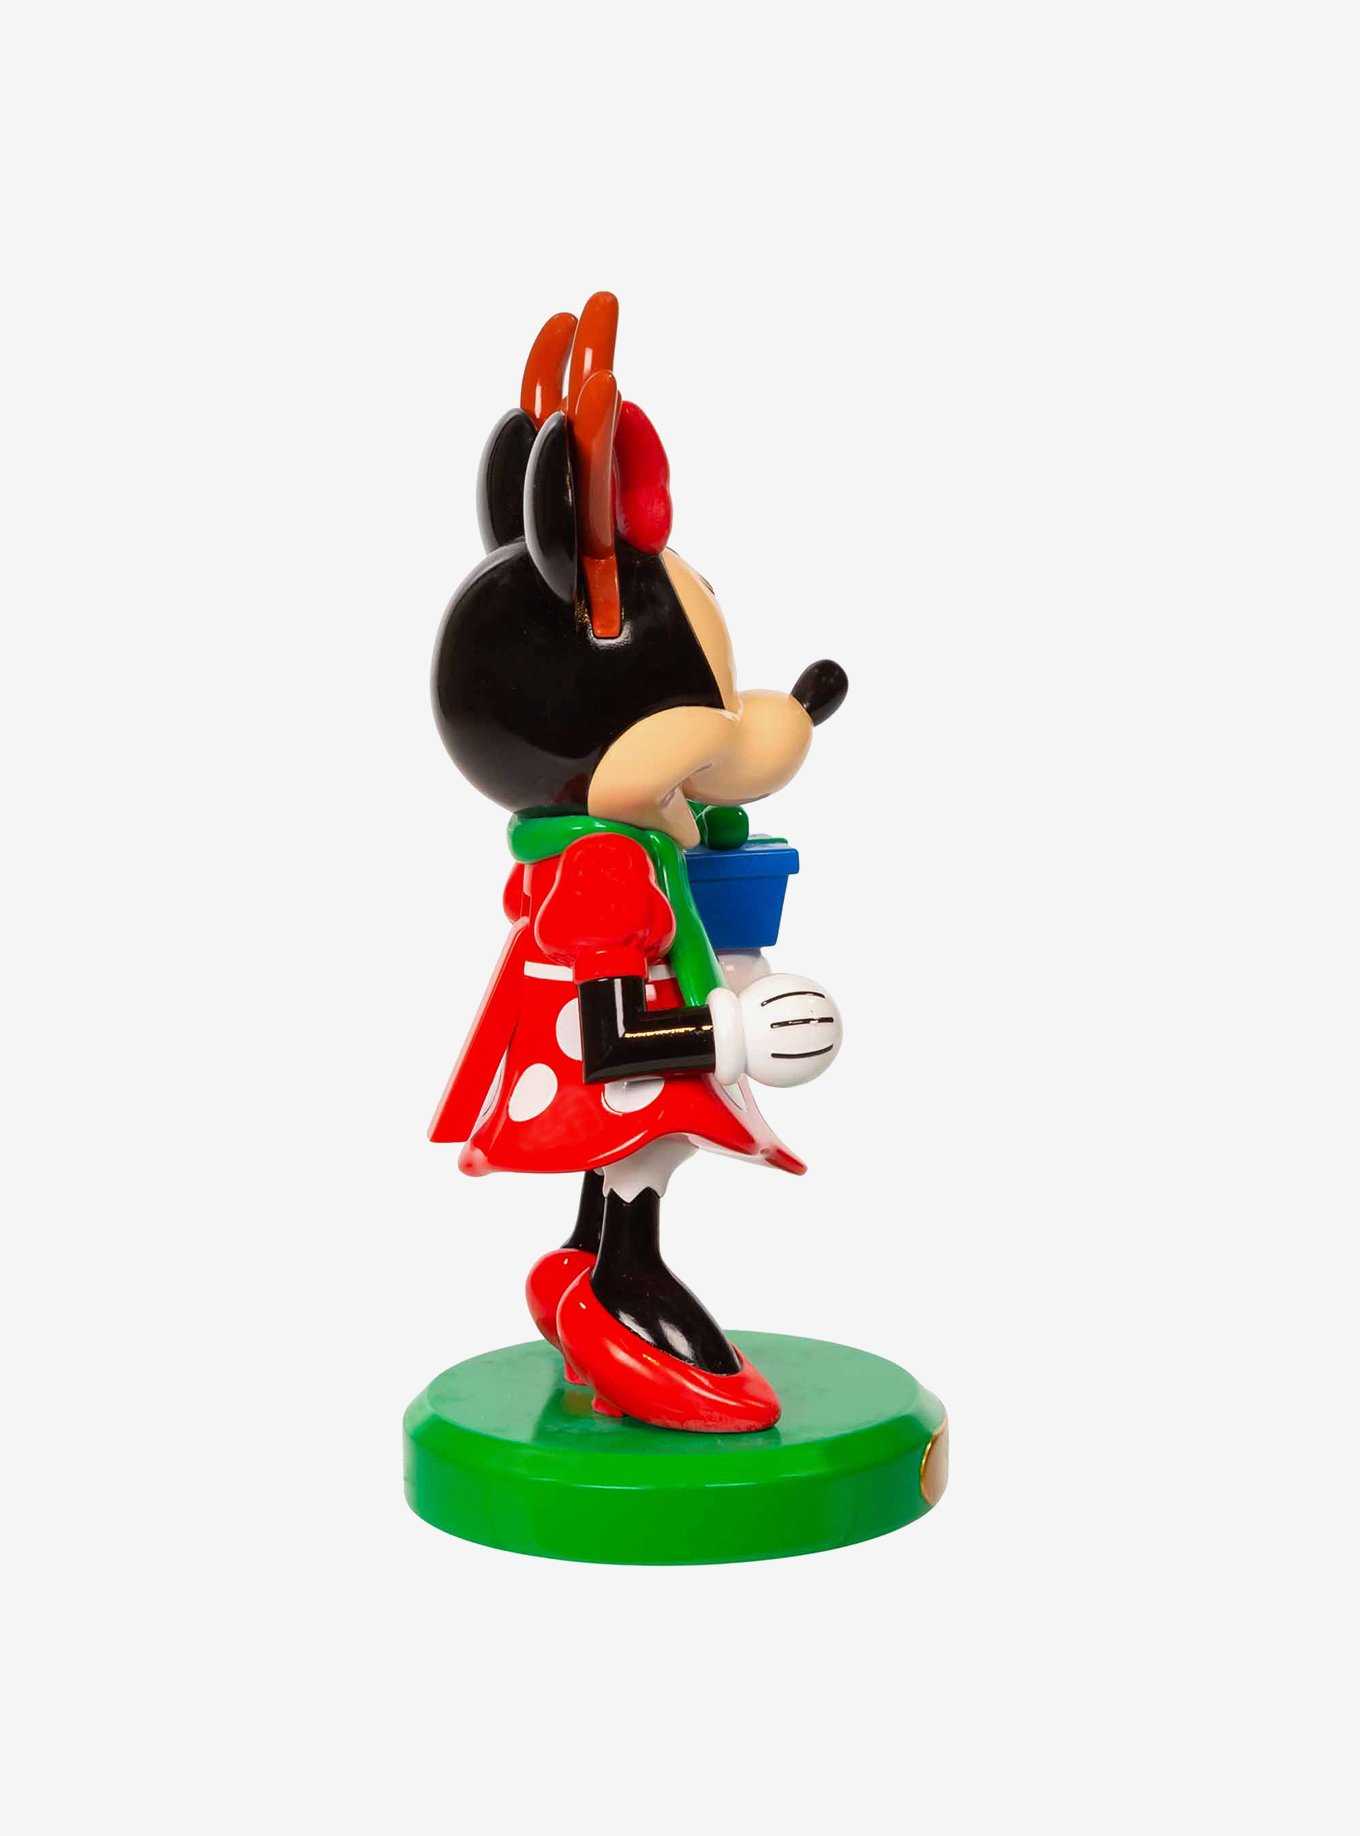 Disney Minnie Mouse with Tree Nutcracker, , hi-res